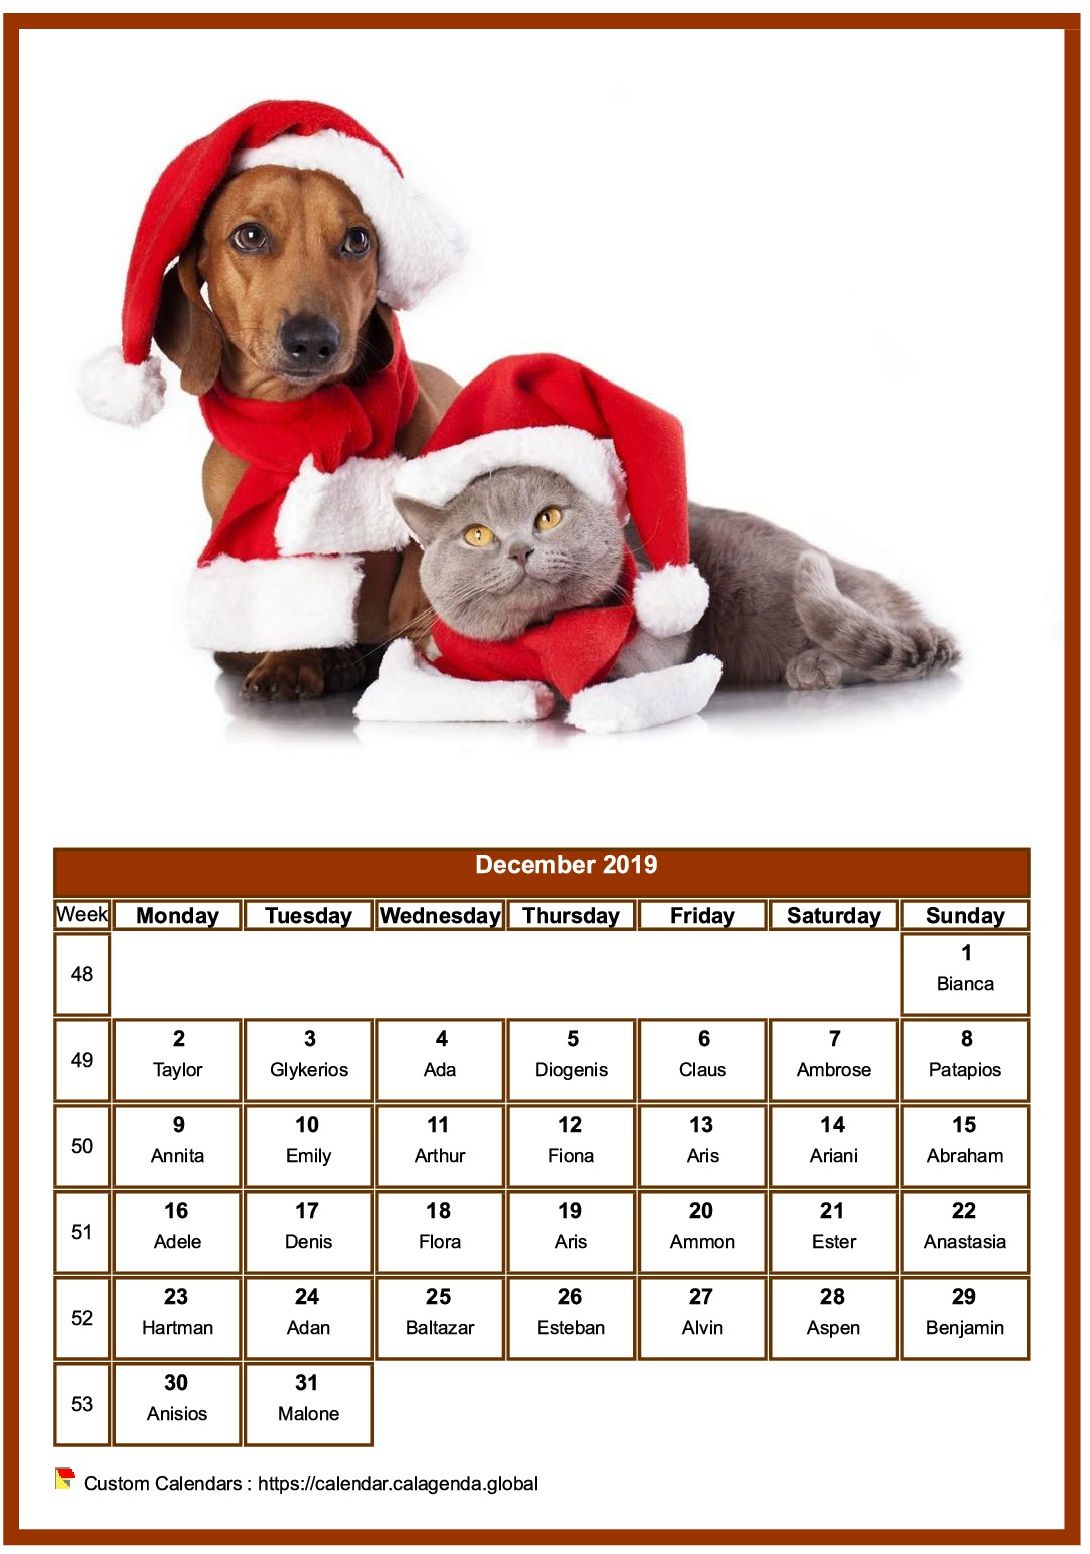 Calendar December 2019 dogs